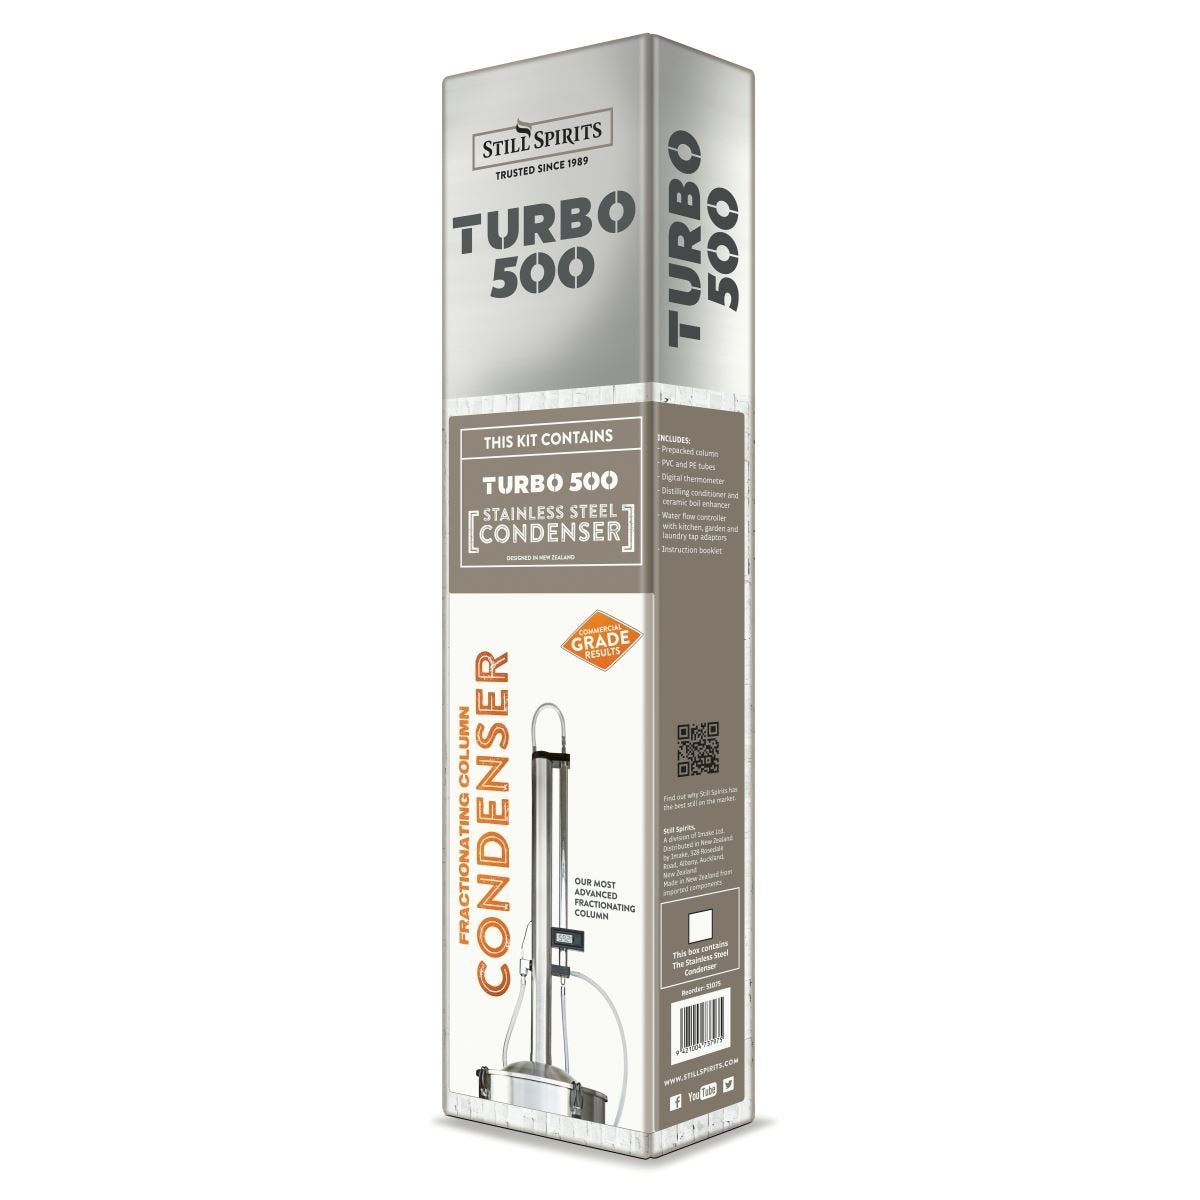 Still Spirits Turbo 500 (T-500) Water Distiller & Oil Extractor with Reflux Column